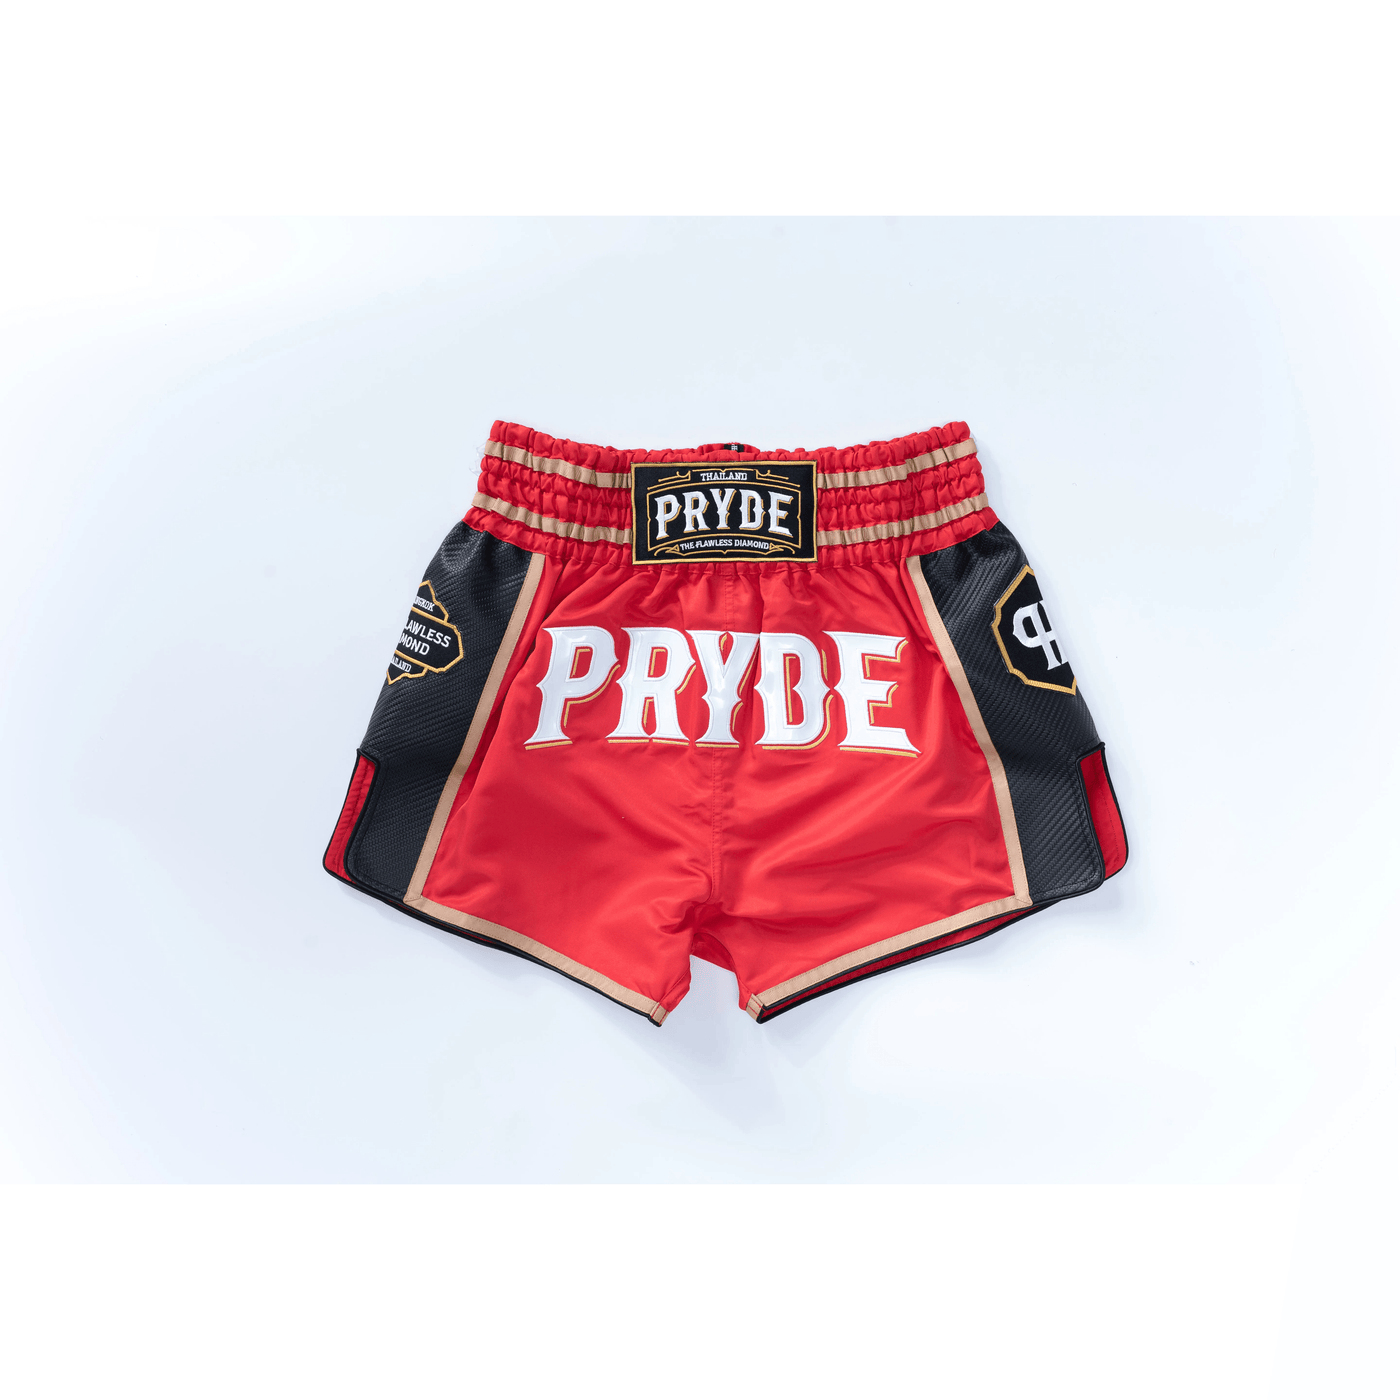 PRYDE Muay Thai Shorts - Red & Black - Muay Thailand